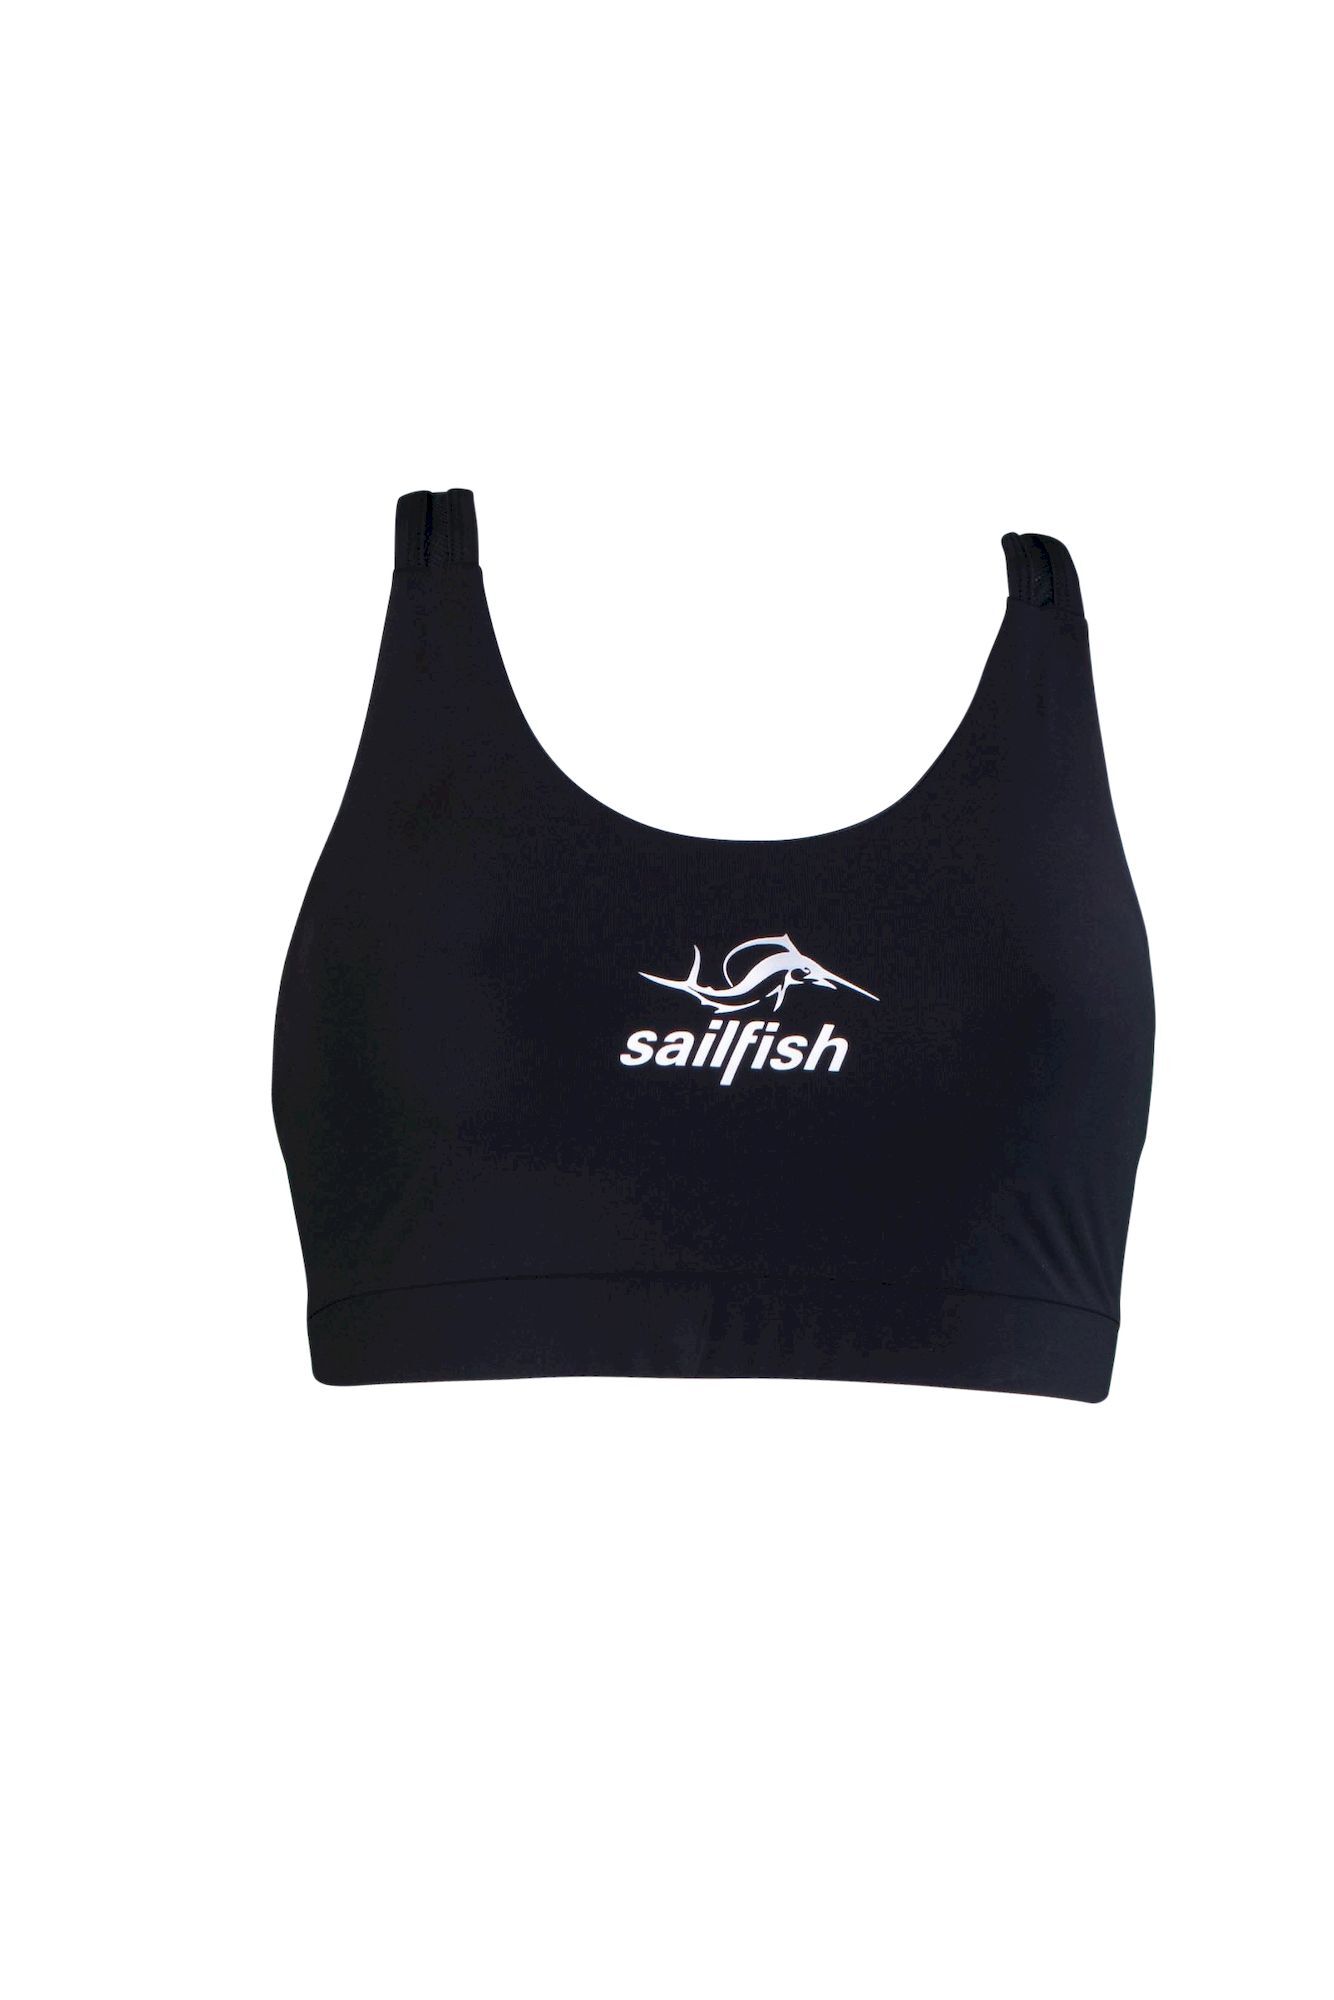 Sailfish Womens Tribra Perform - Triathlon anzug - Damen | Hardloop